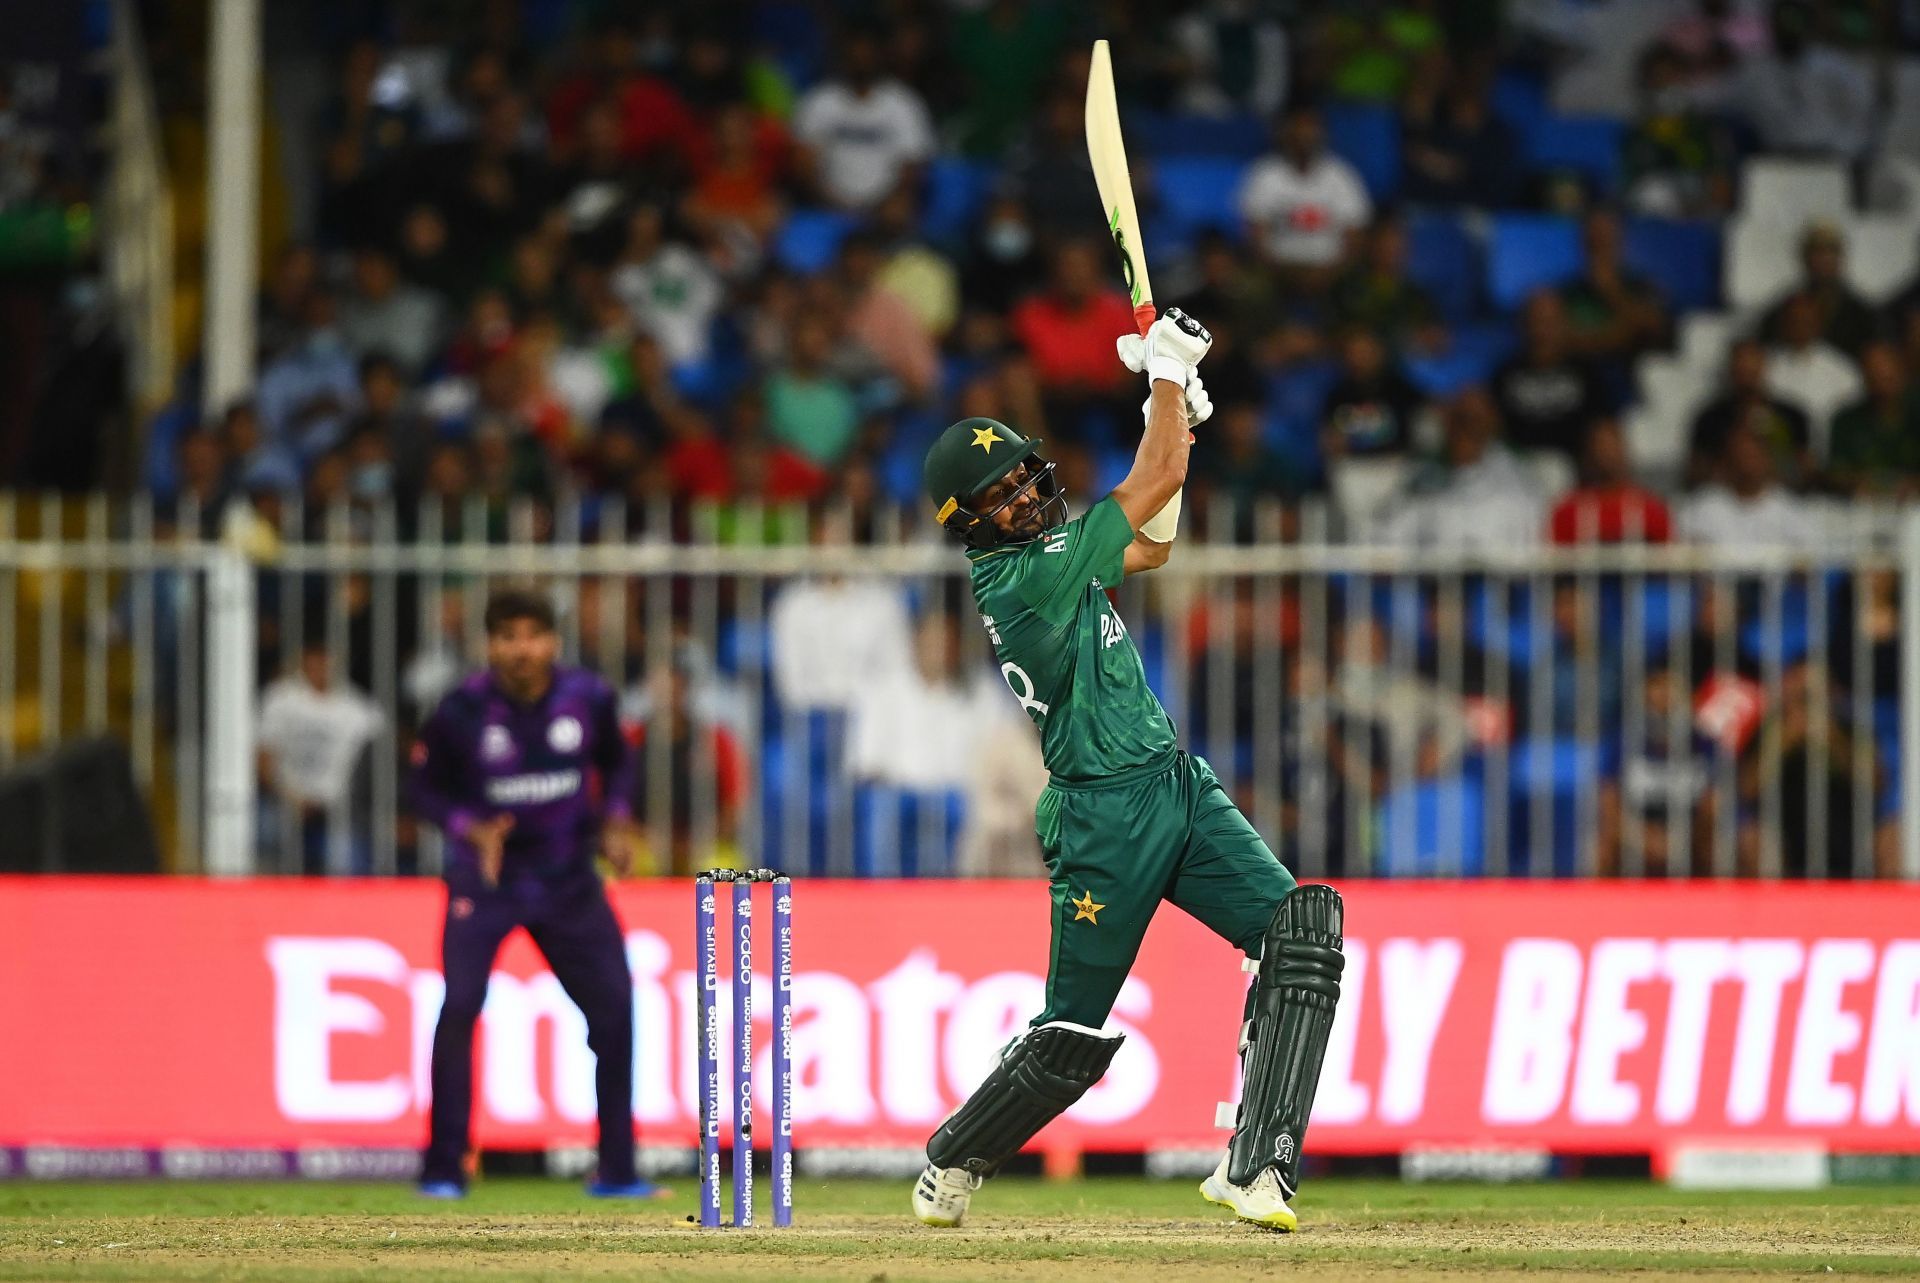 Asif Ali played two incredible knocks for Pakistan